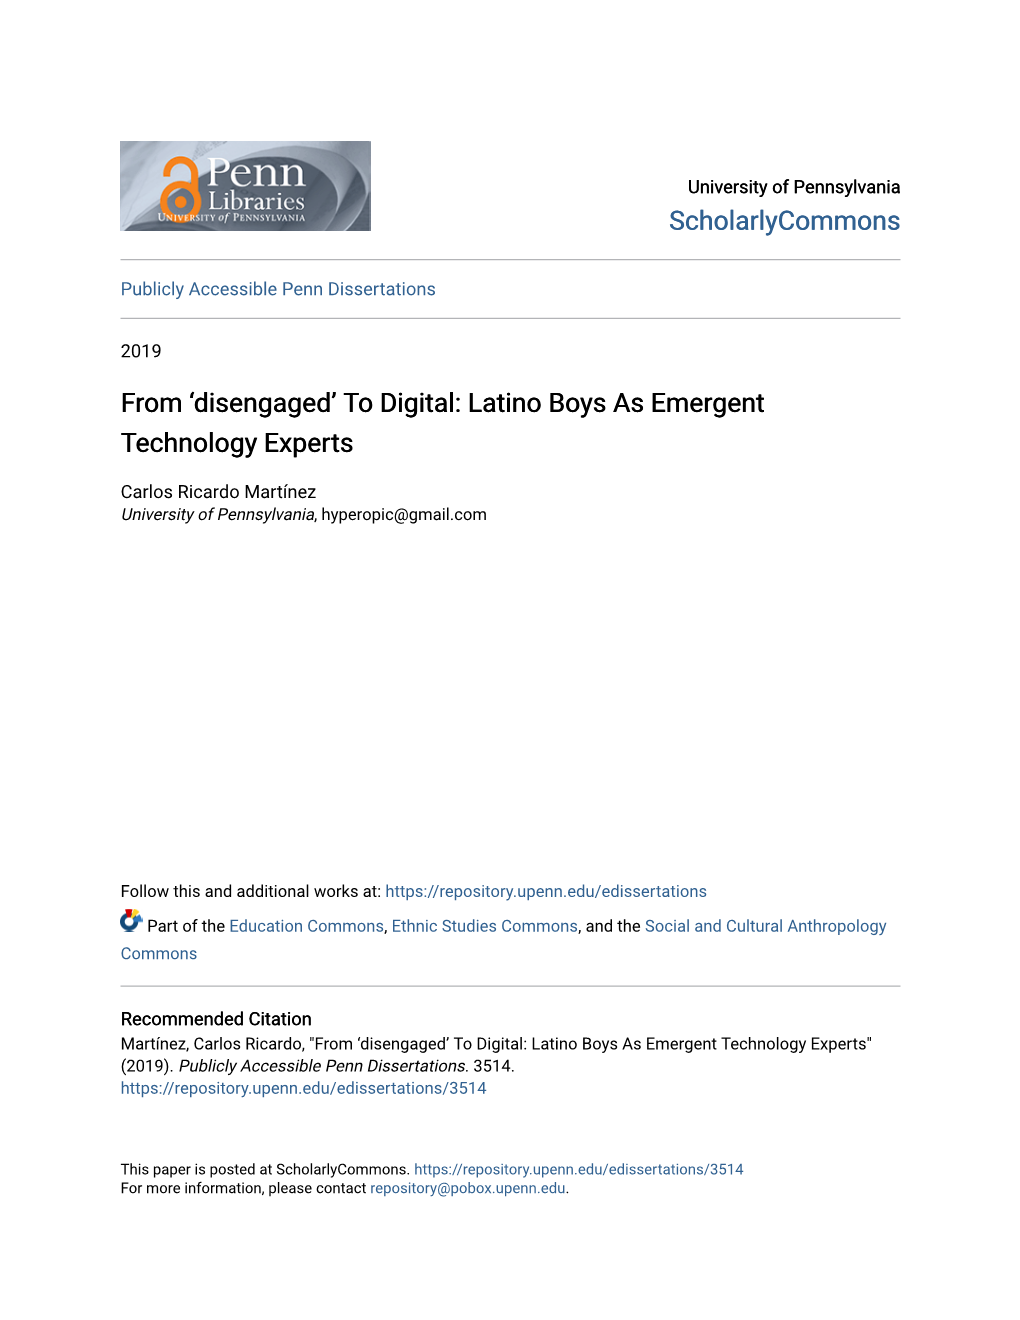 Latino Boys As Emergent Technology Experts